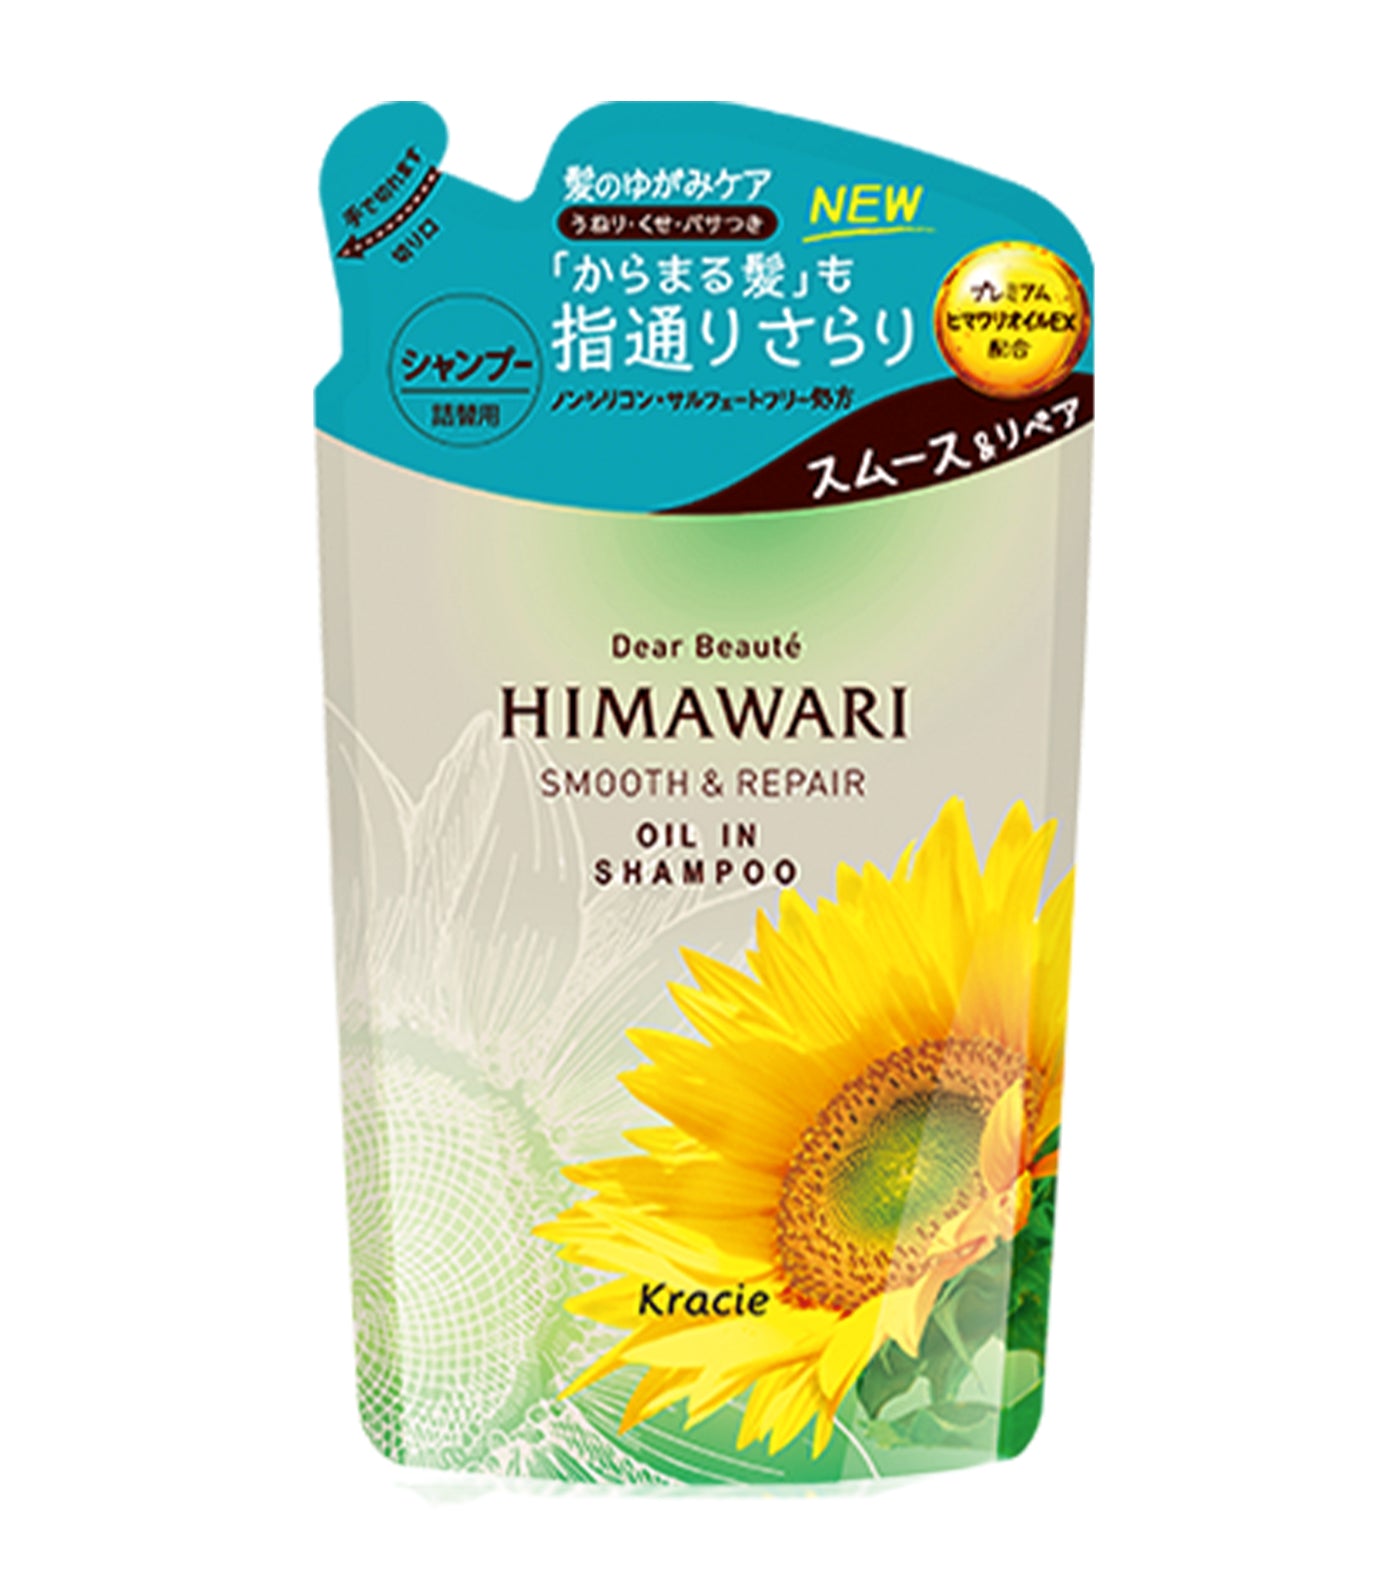 Dear Beaute Himawari Smooth and Repair Oil in Shampoo Refill Pack